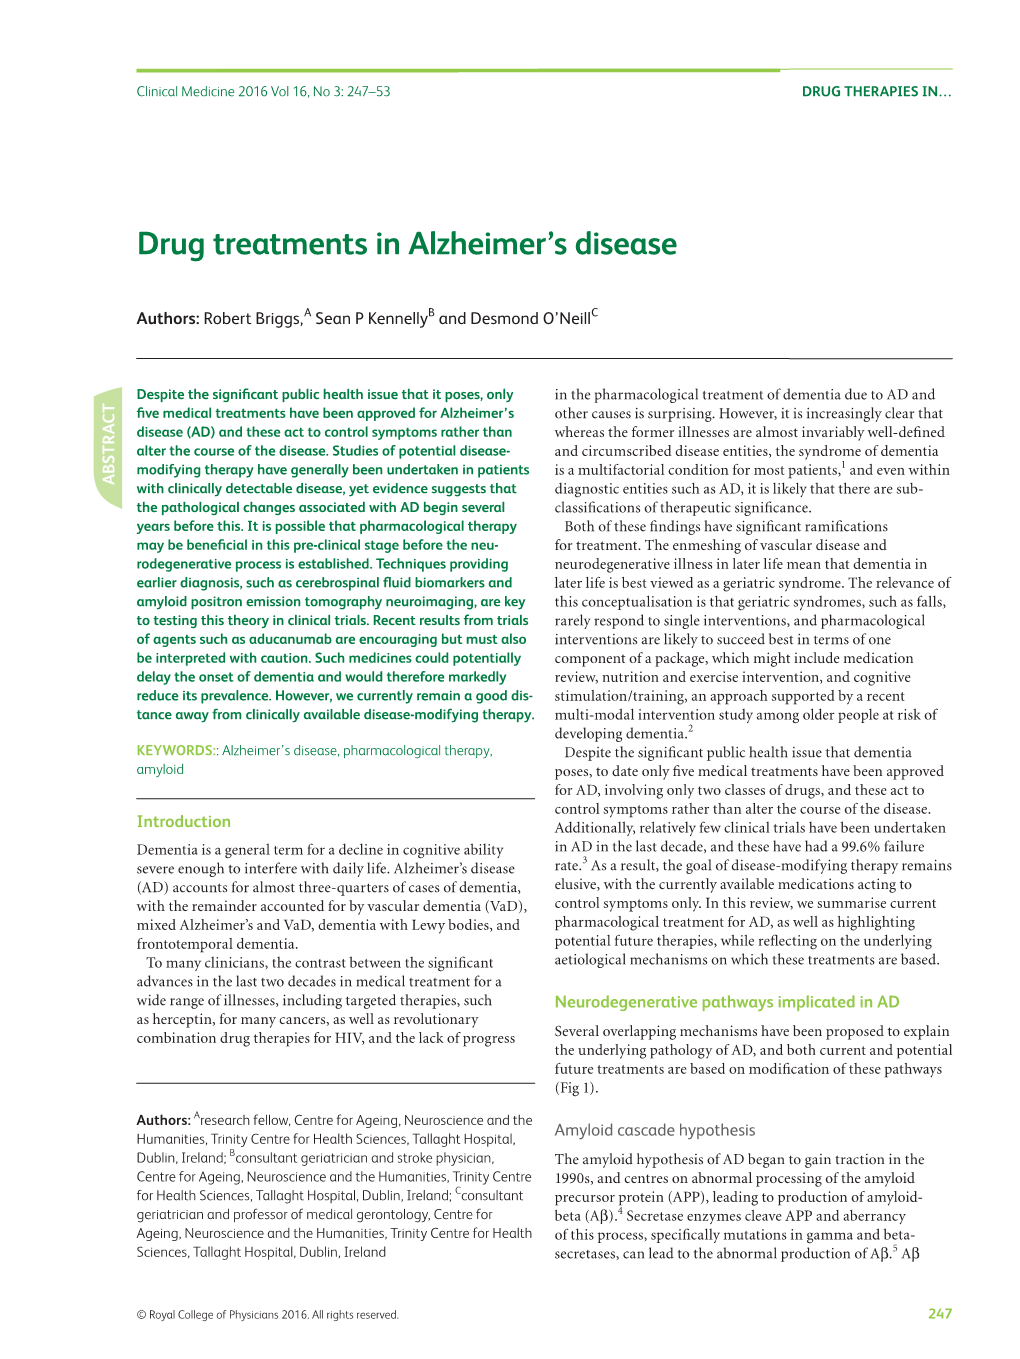 Drug Treatments in Alzheimer's Disease